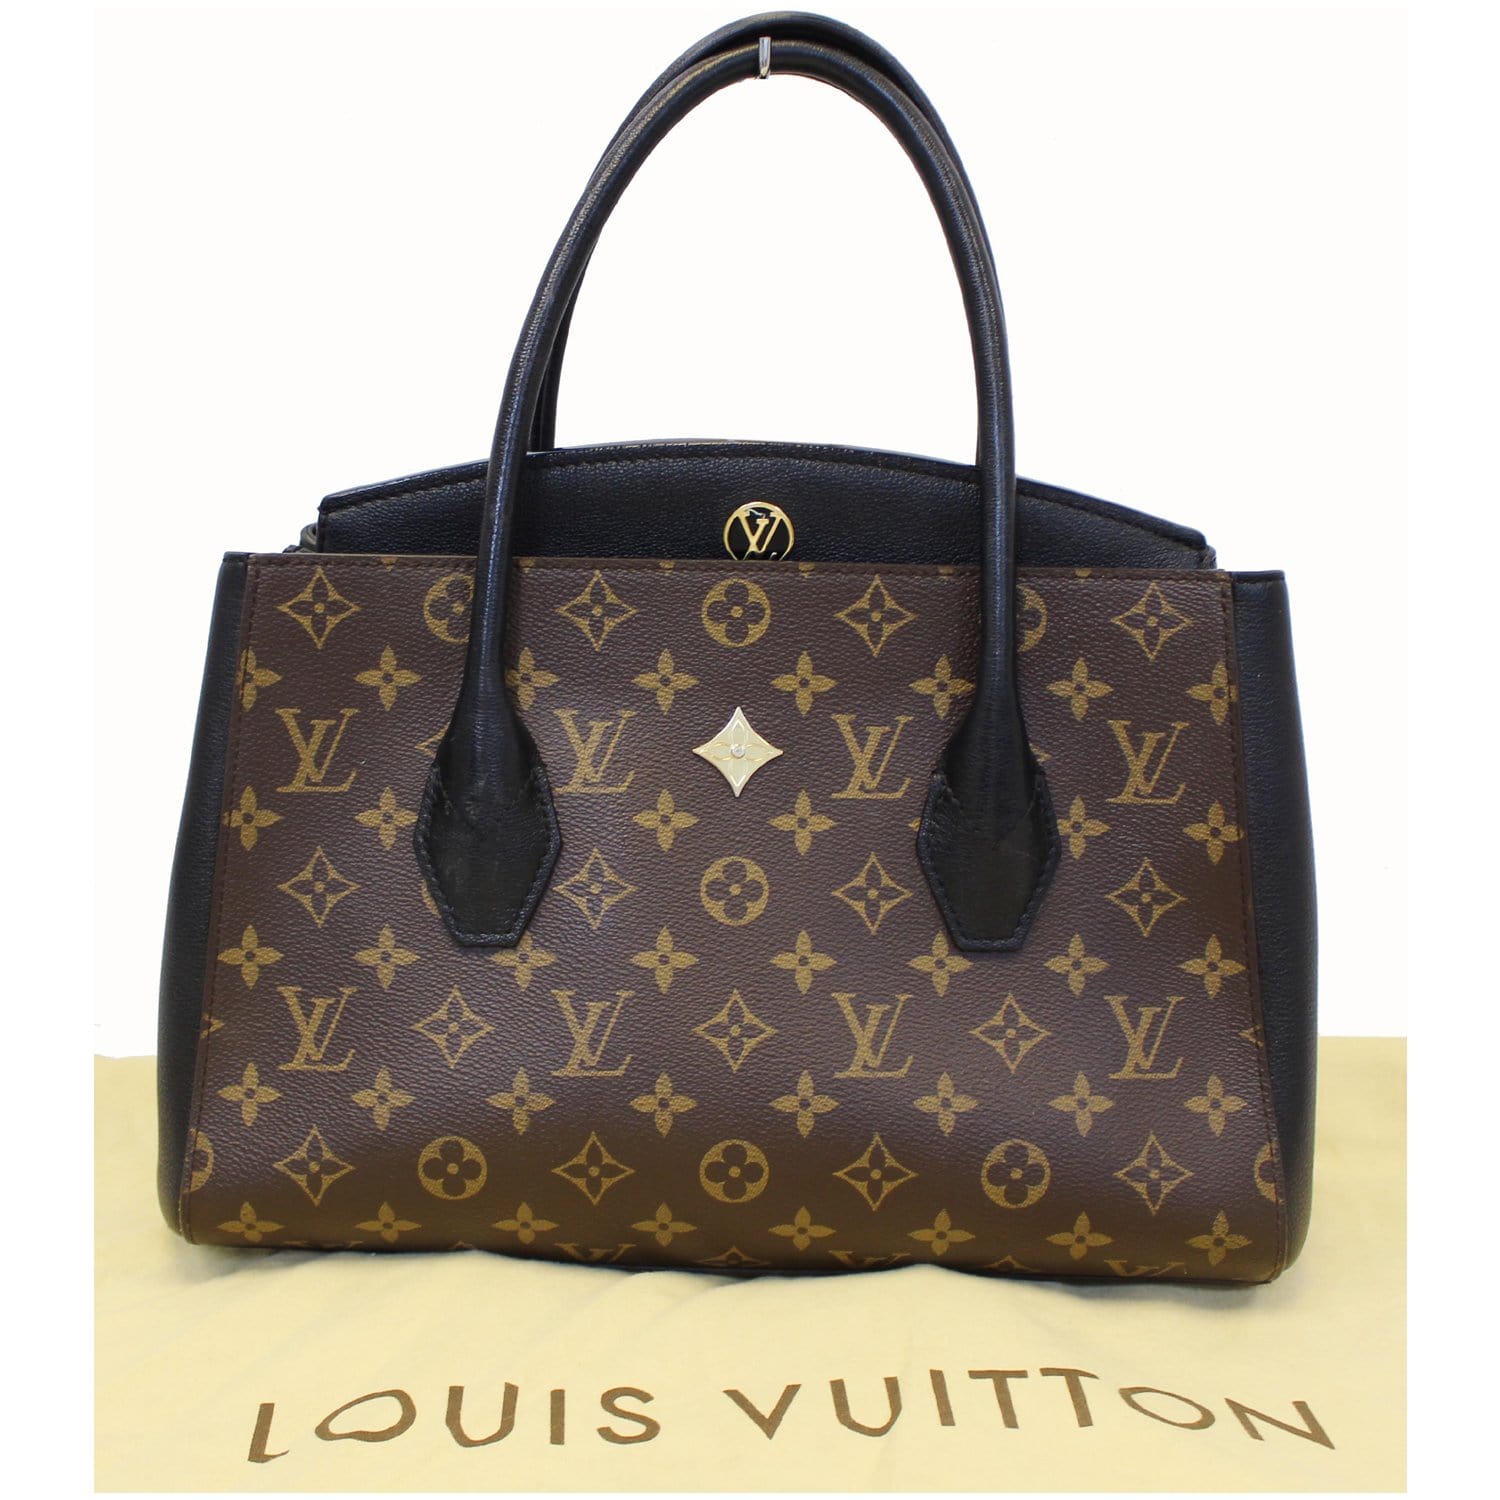 Loving my Louis Vuitton Florine..so chic